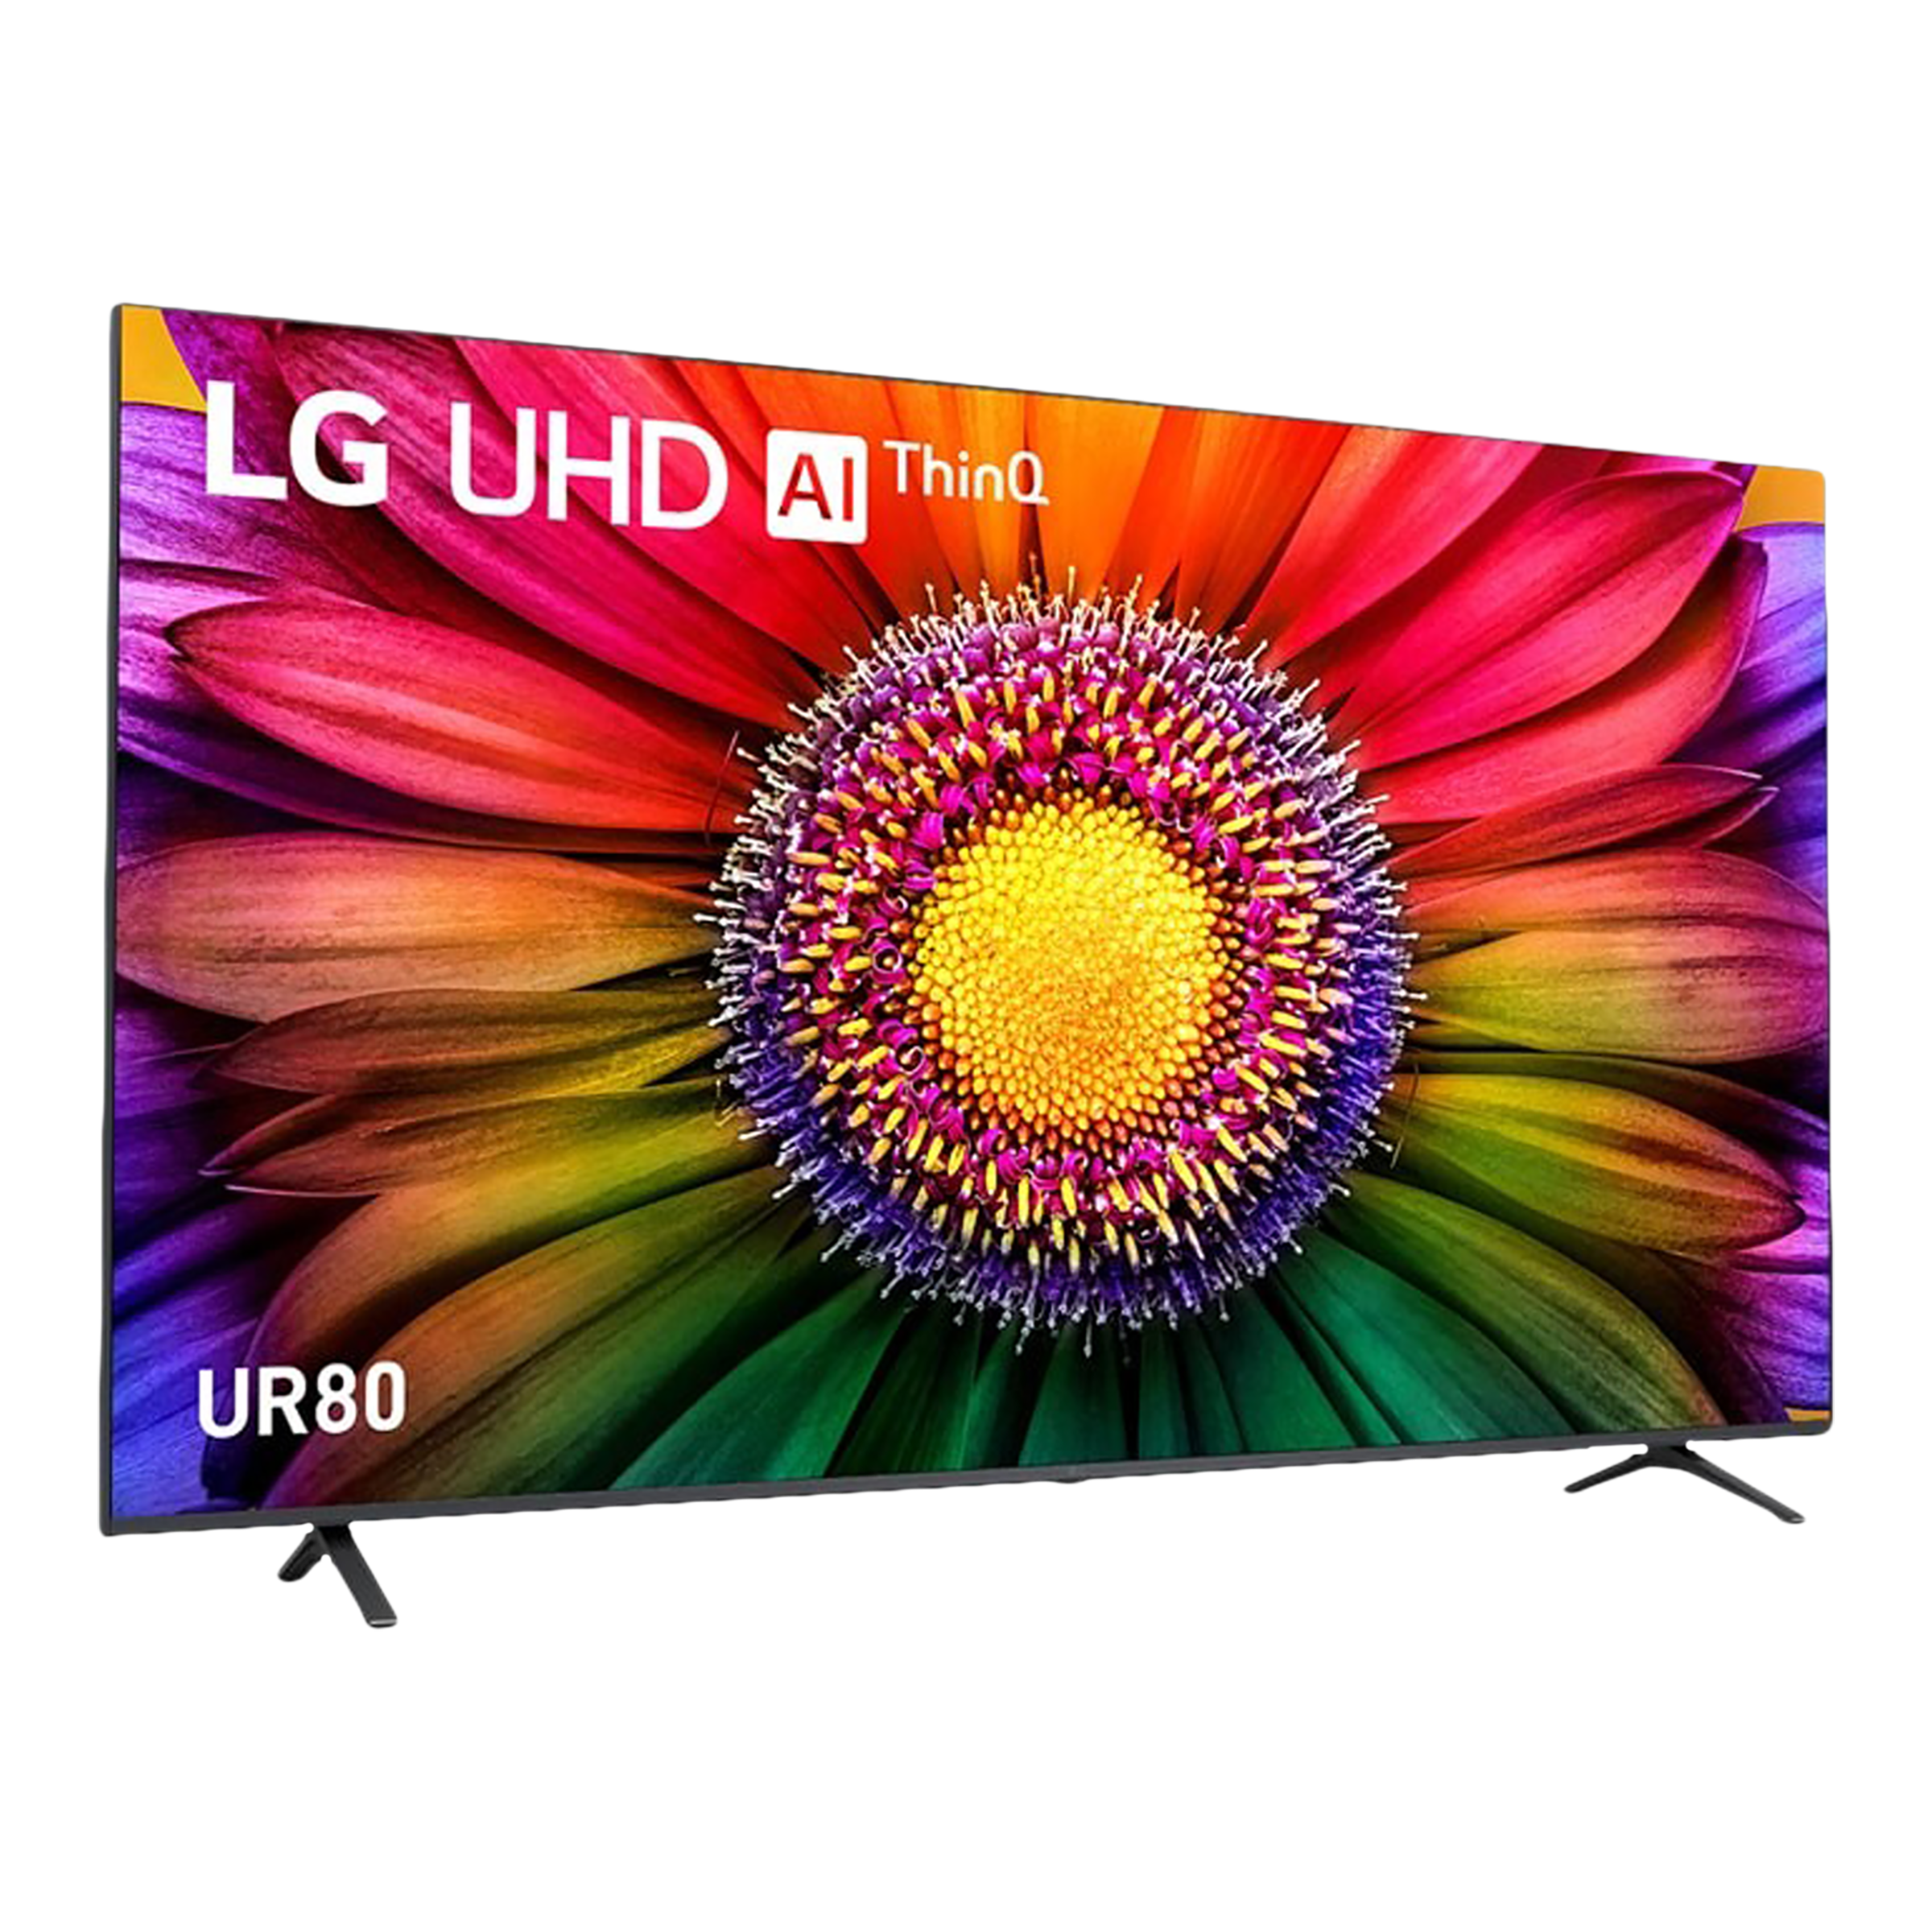 LG 139 cm (55 inch) Ultra HD (4K) LED Smart WebOS TV Online at